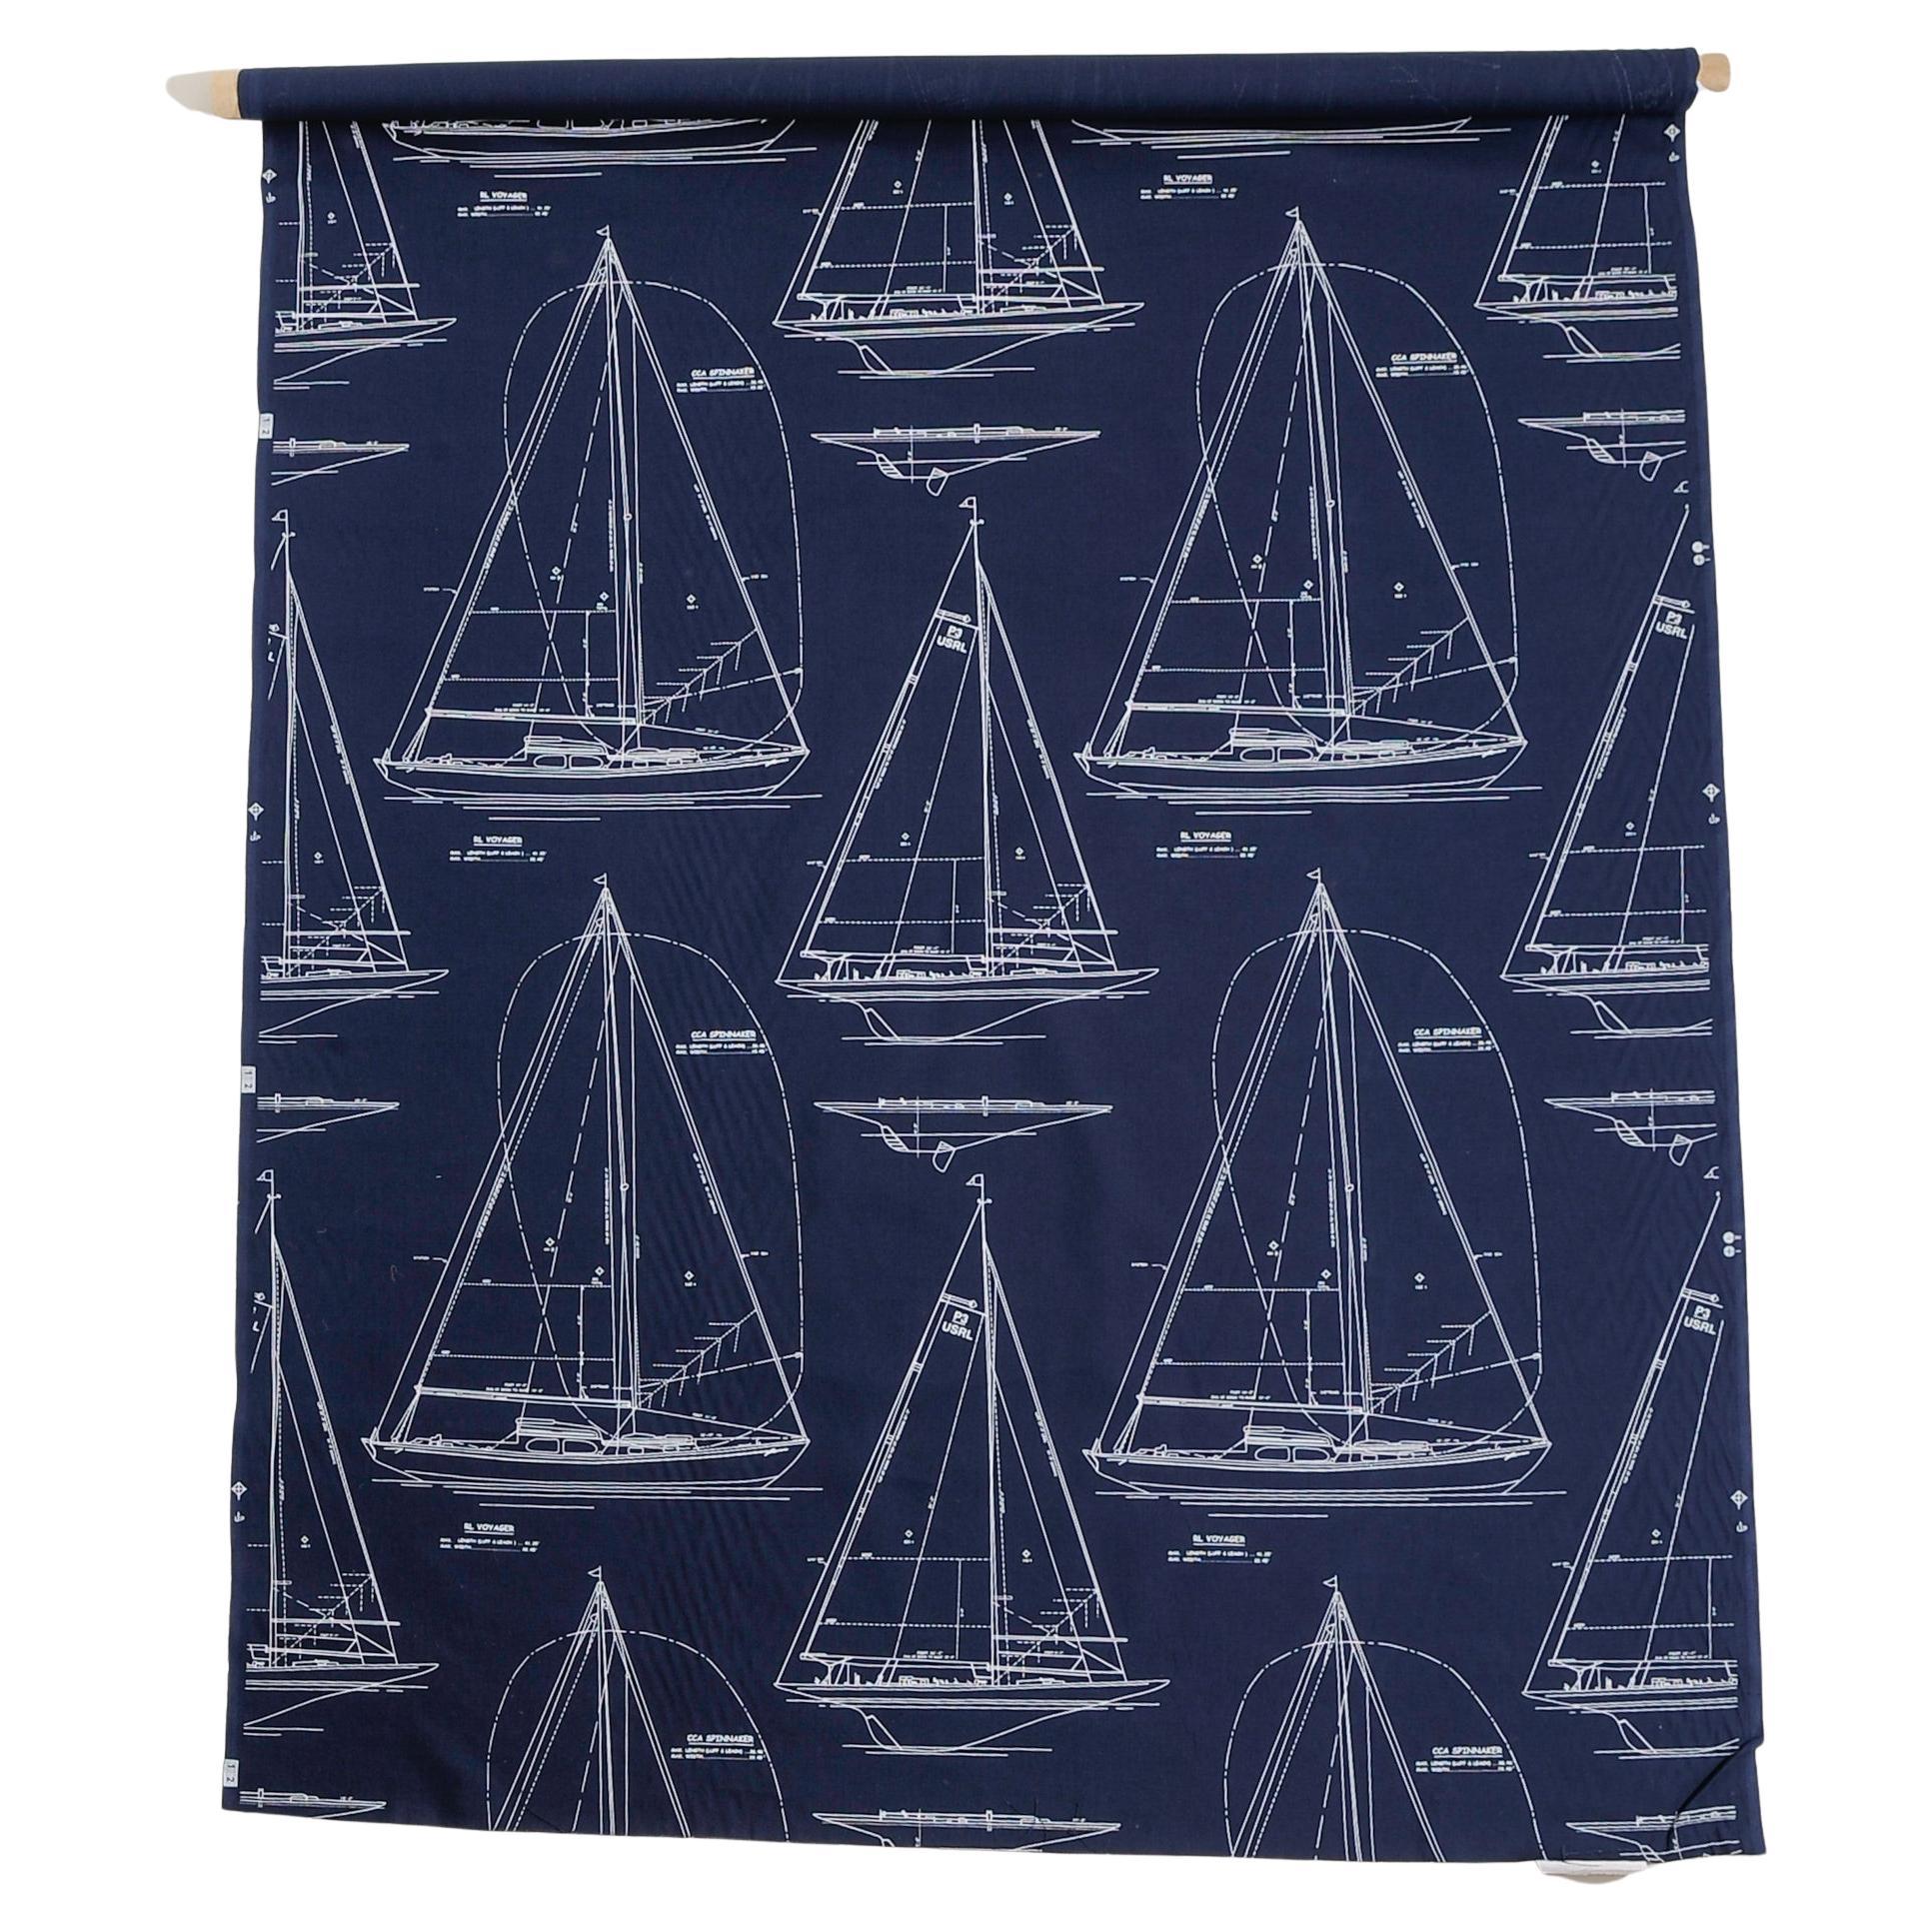 Sailor on Blue Textile Fabric